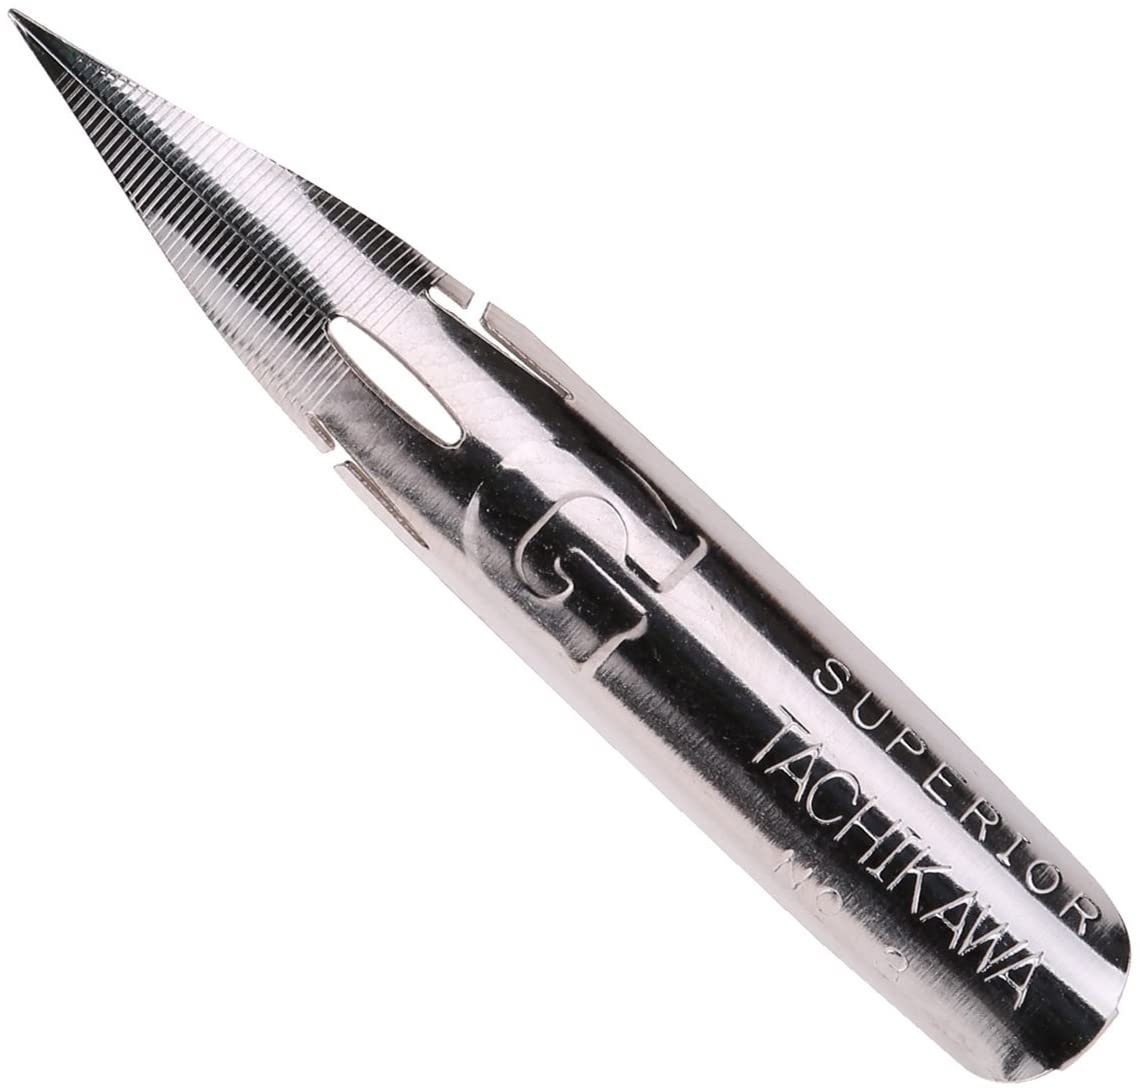 Koh-i-noor Rapidosketch Technical Pen Set, 0.35mm Nib, Stainless Steel  Technical Drawing, Anime, Manga, Comics Drawing 